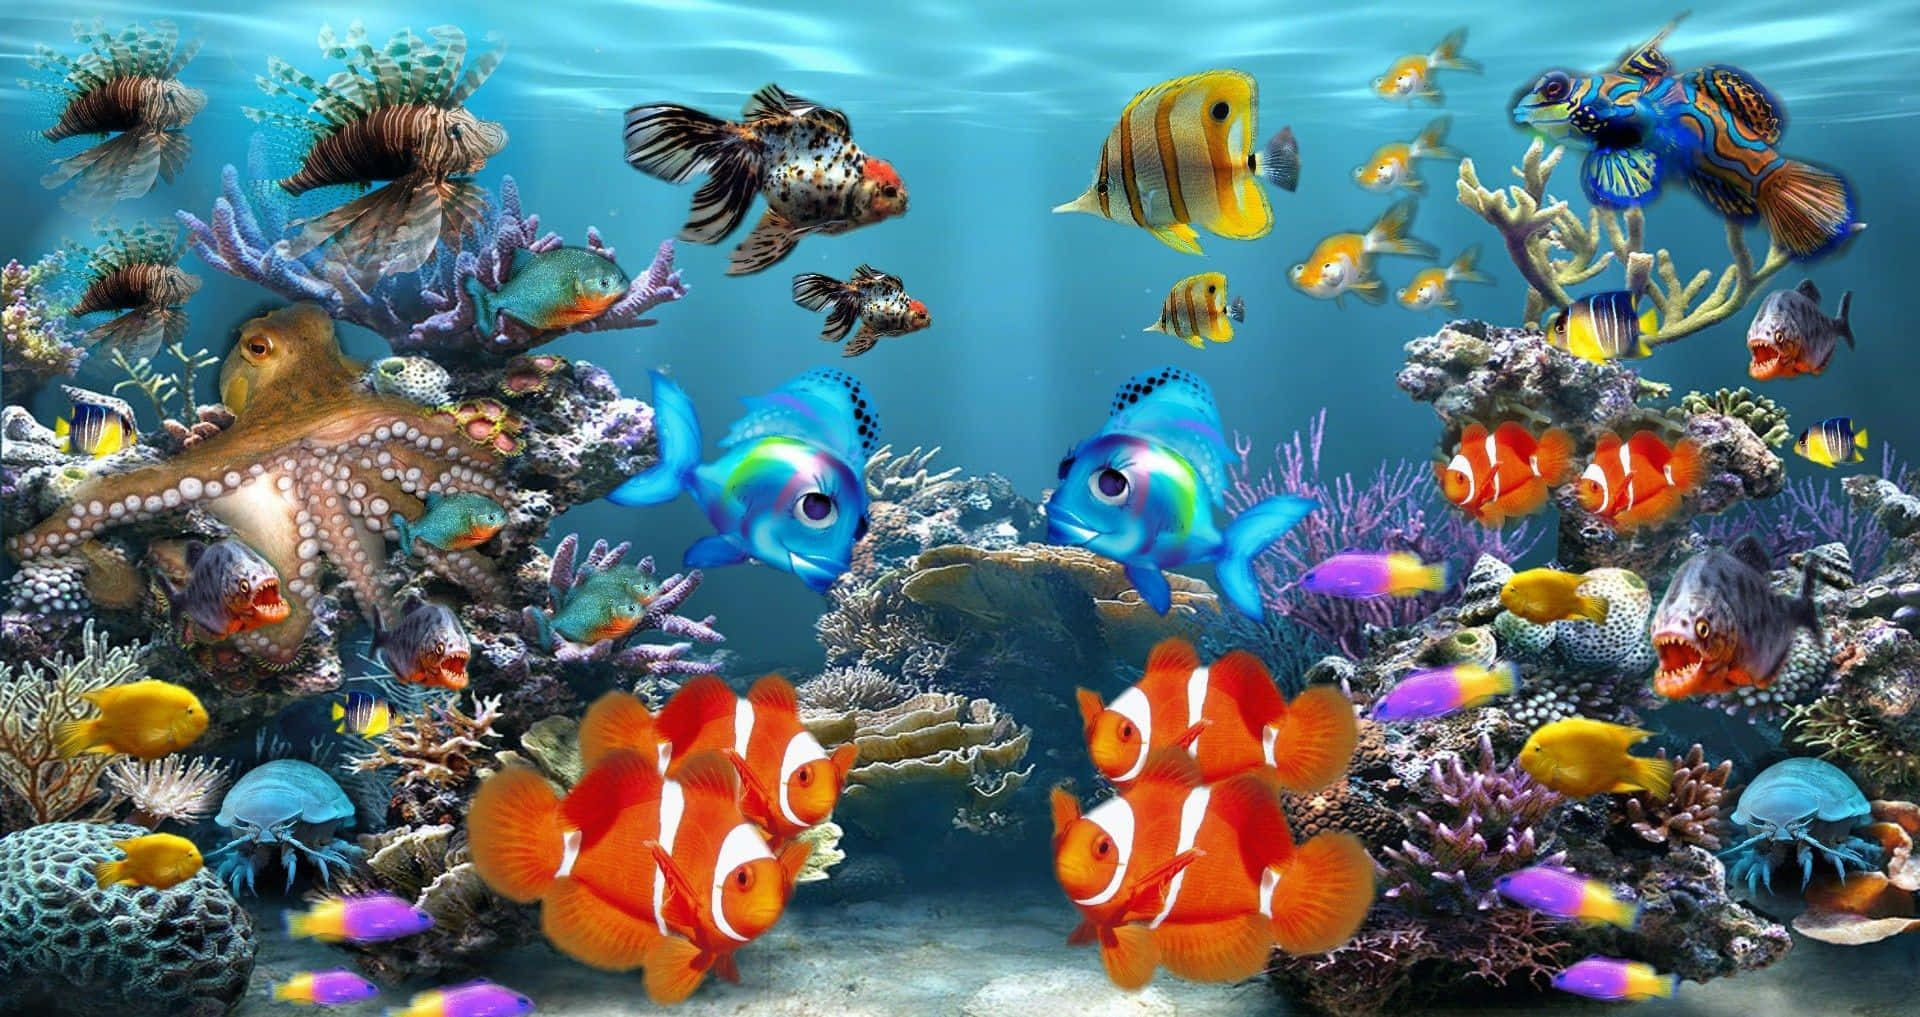 A beautiful school of exotic fish swimming in an aquarium